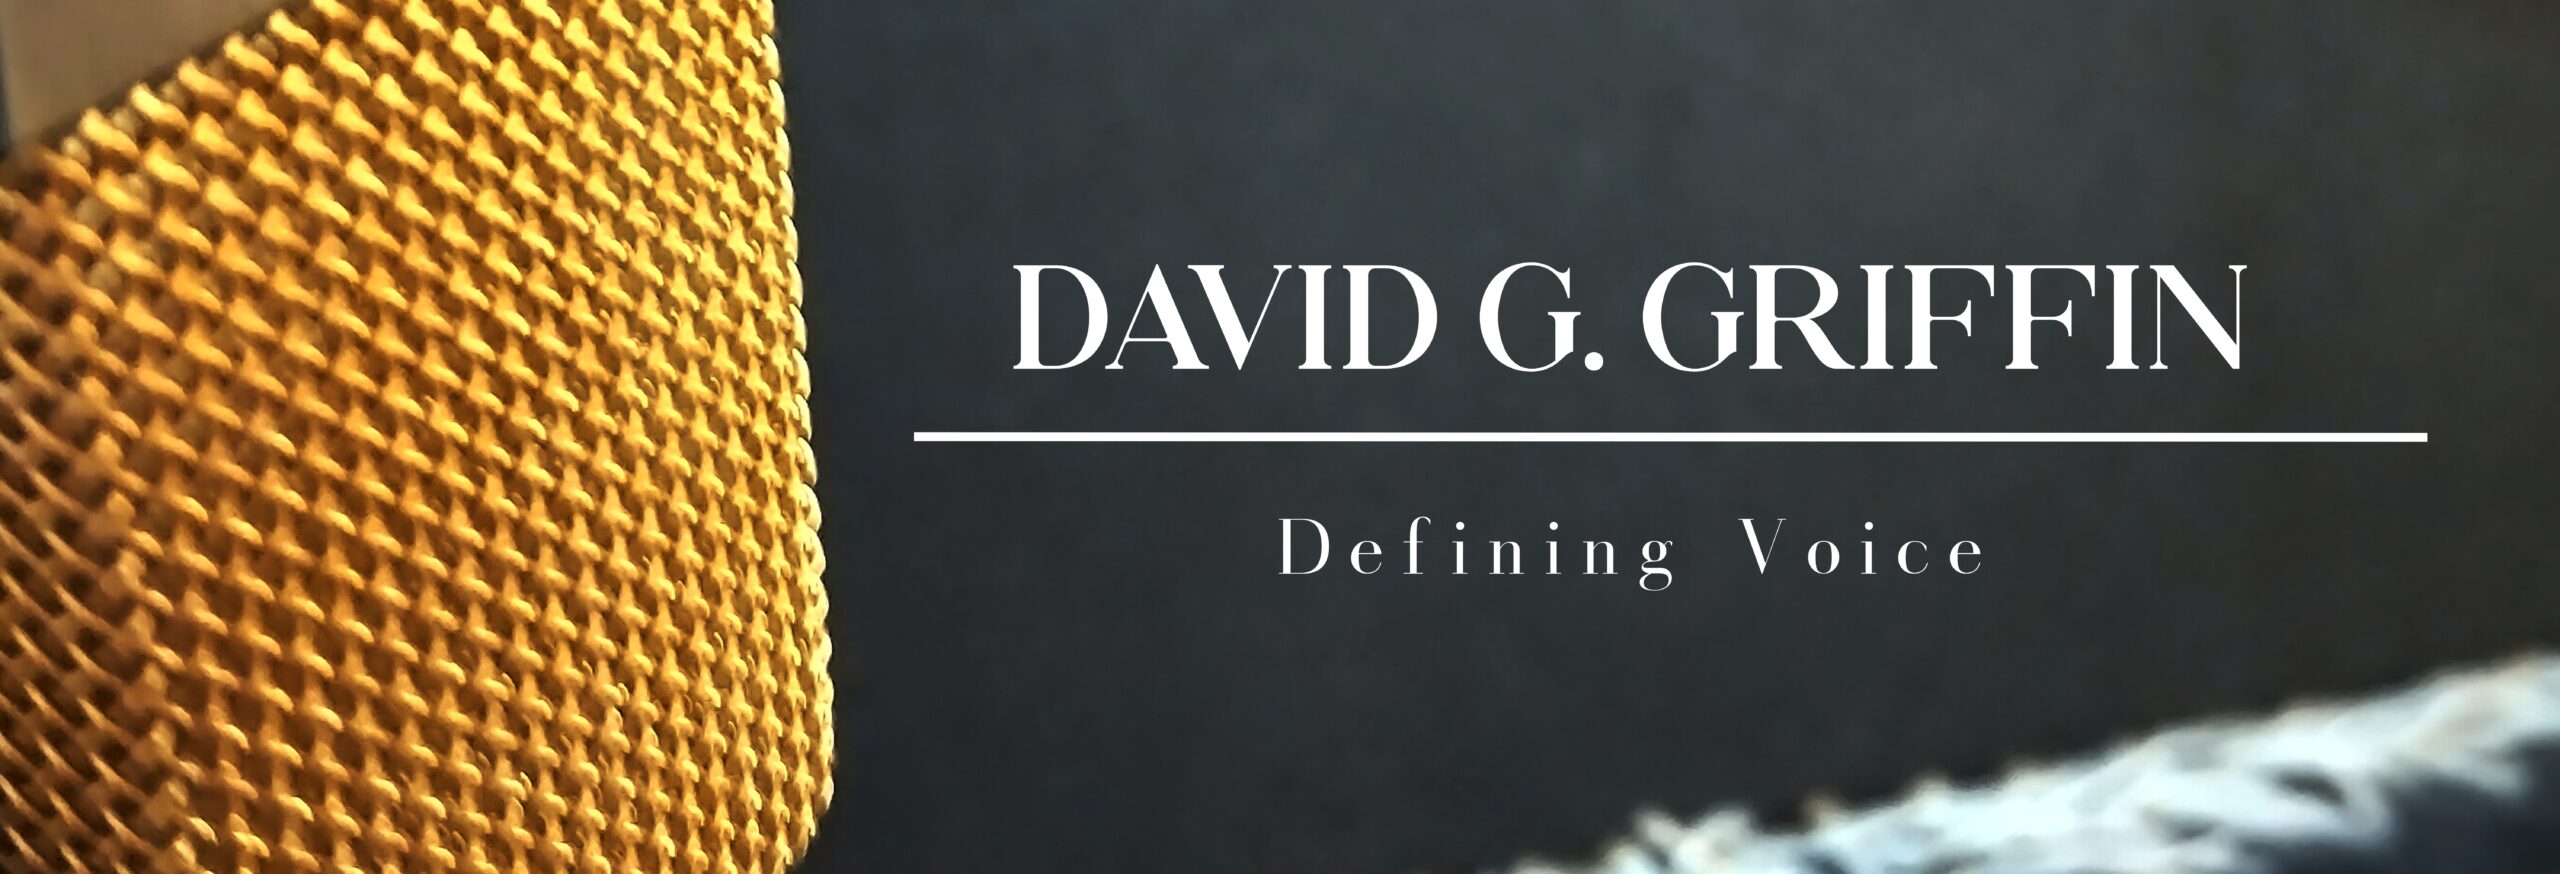 www.DavidGGriffin.com/